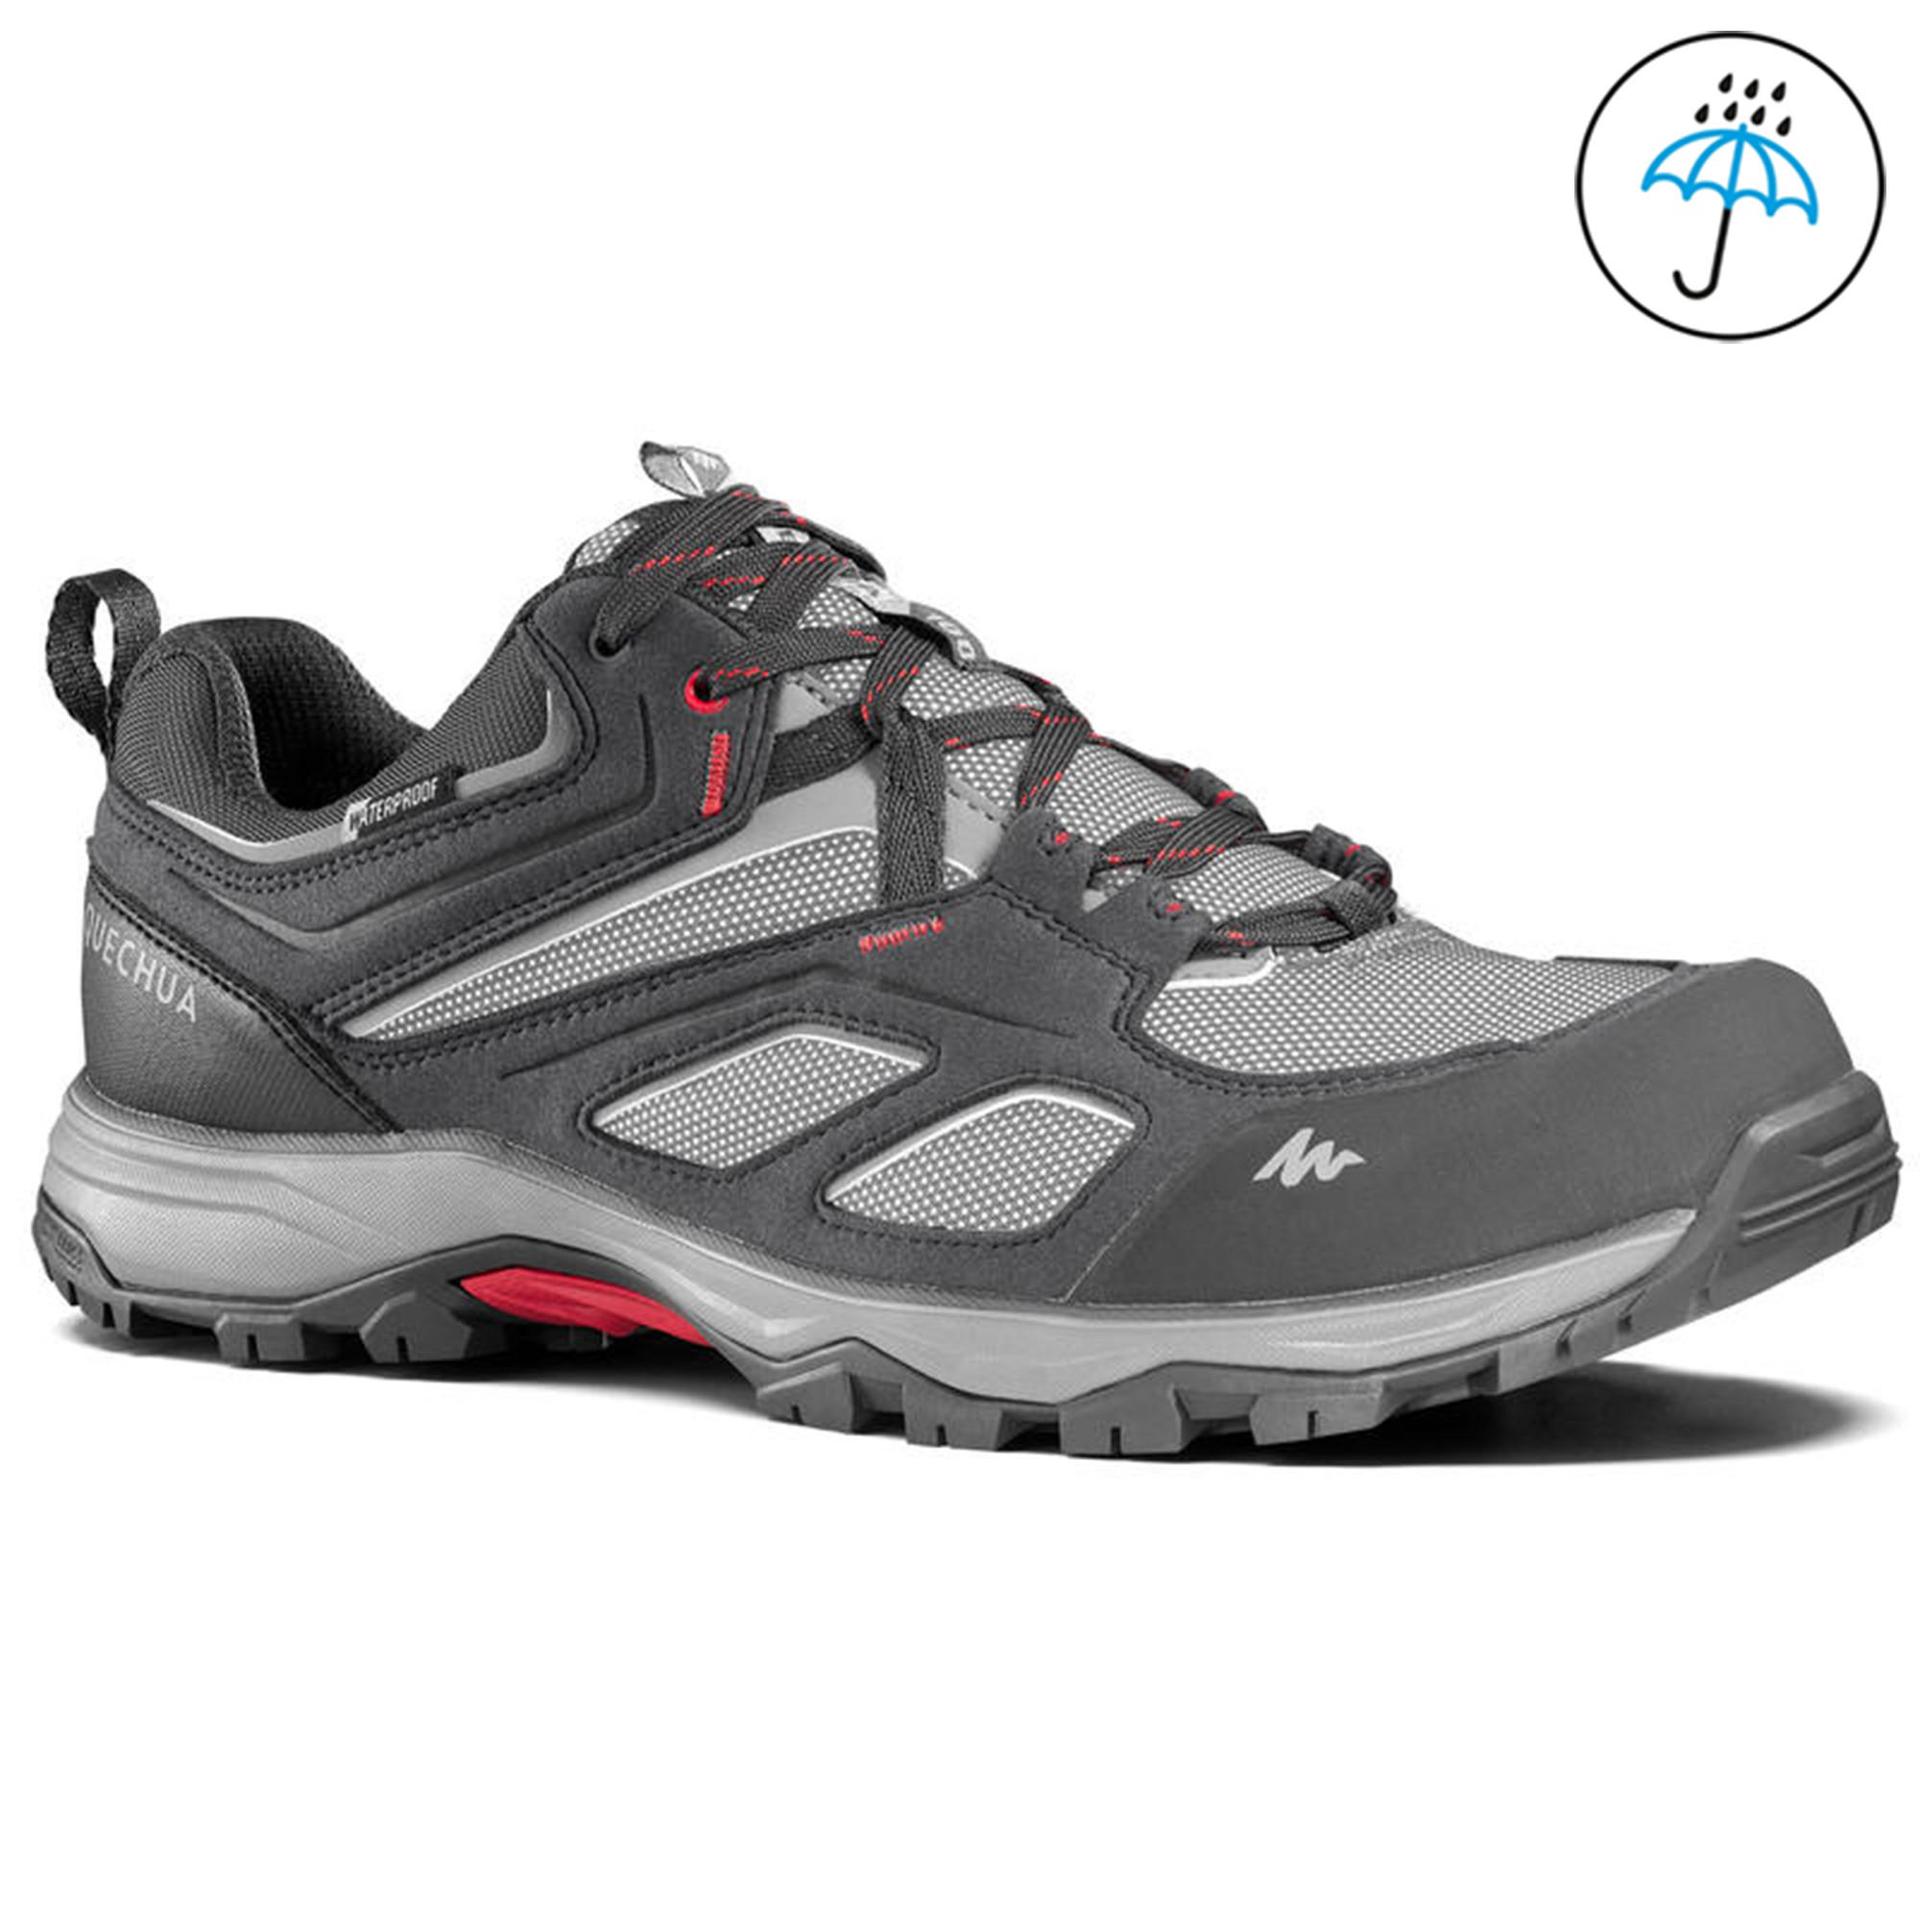 men's-waterproof-hiking-shoes-mh100-grey